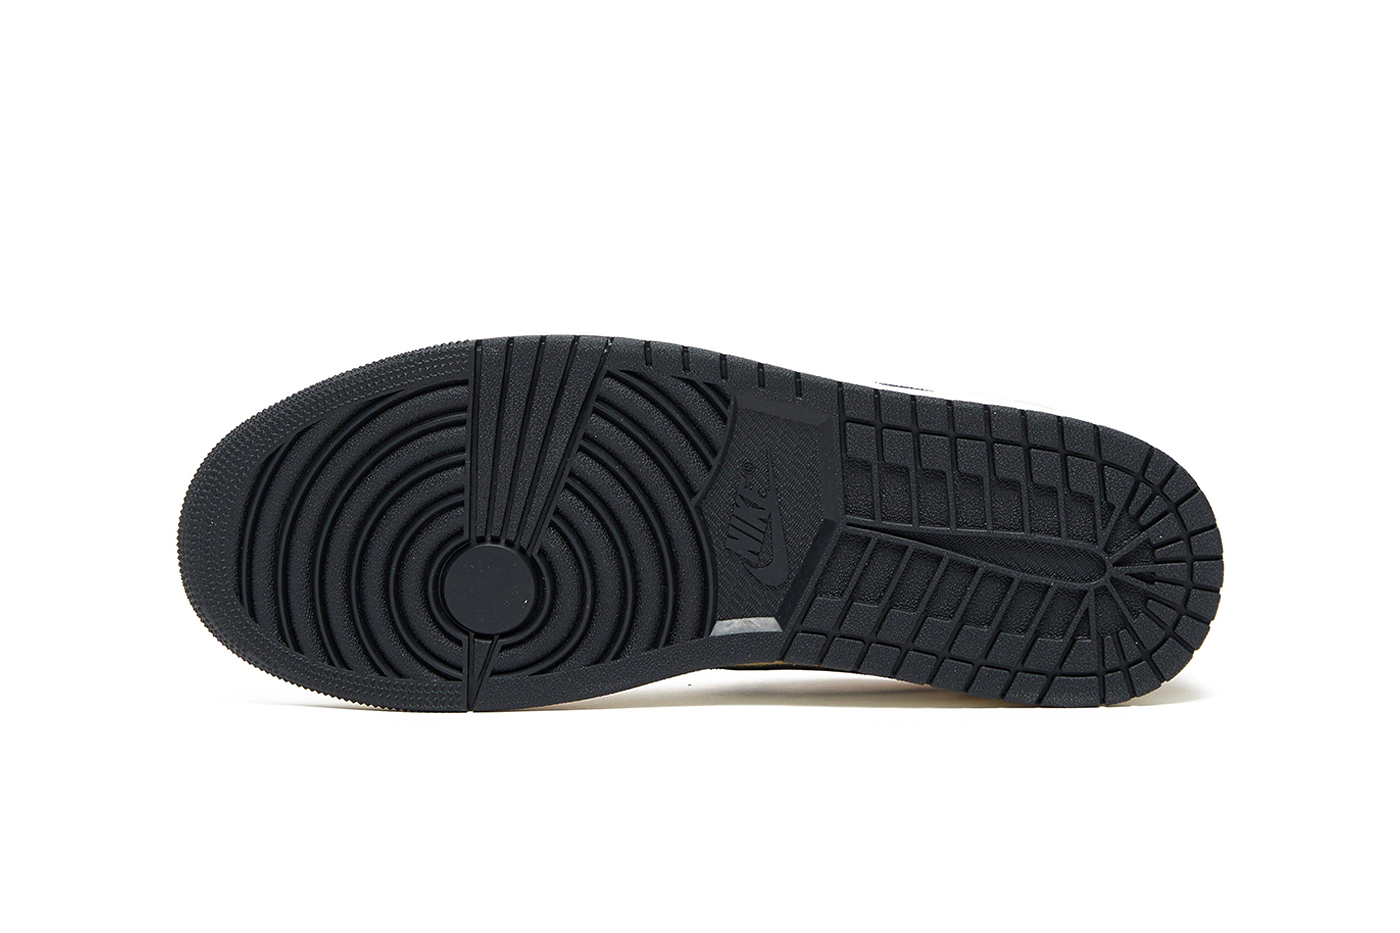 Air Jordan 1 Low 'Coconut Milk' sneakers featuring neutral-toned design and enhanced water resistance.